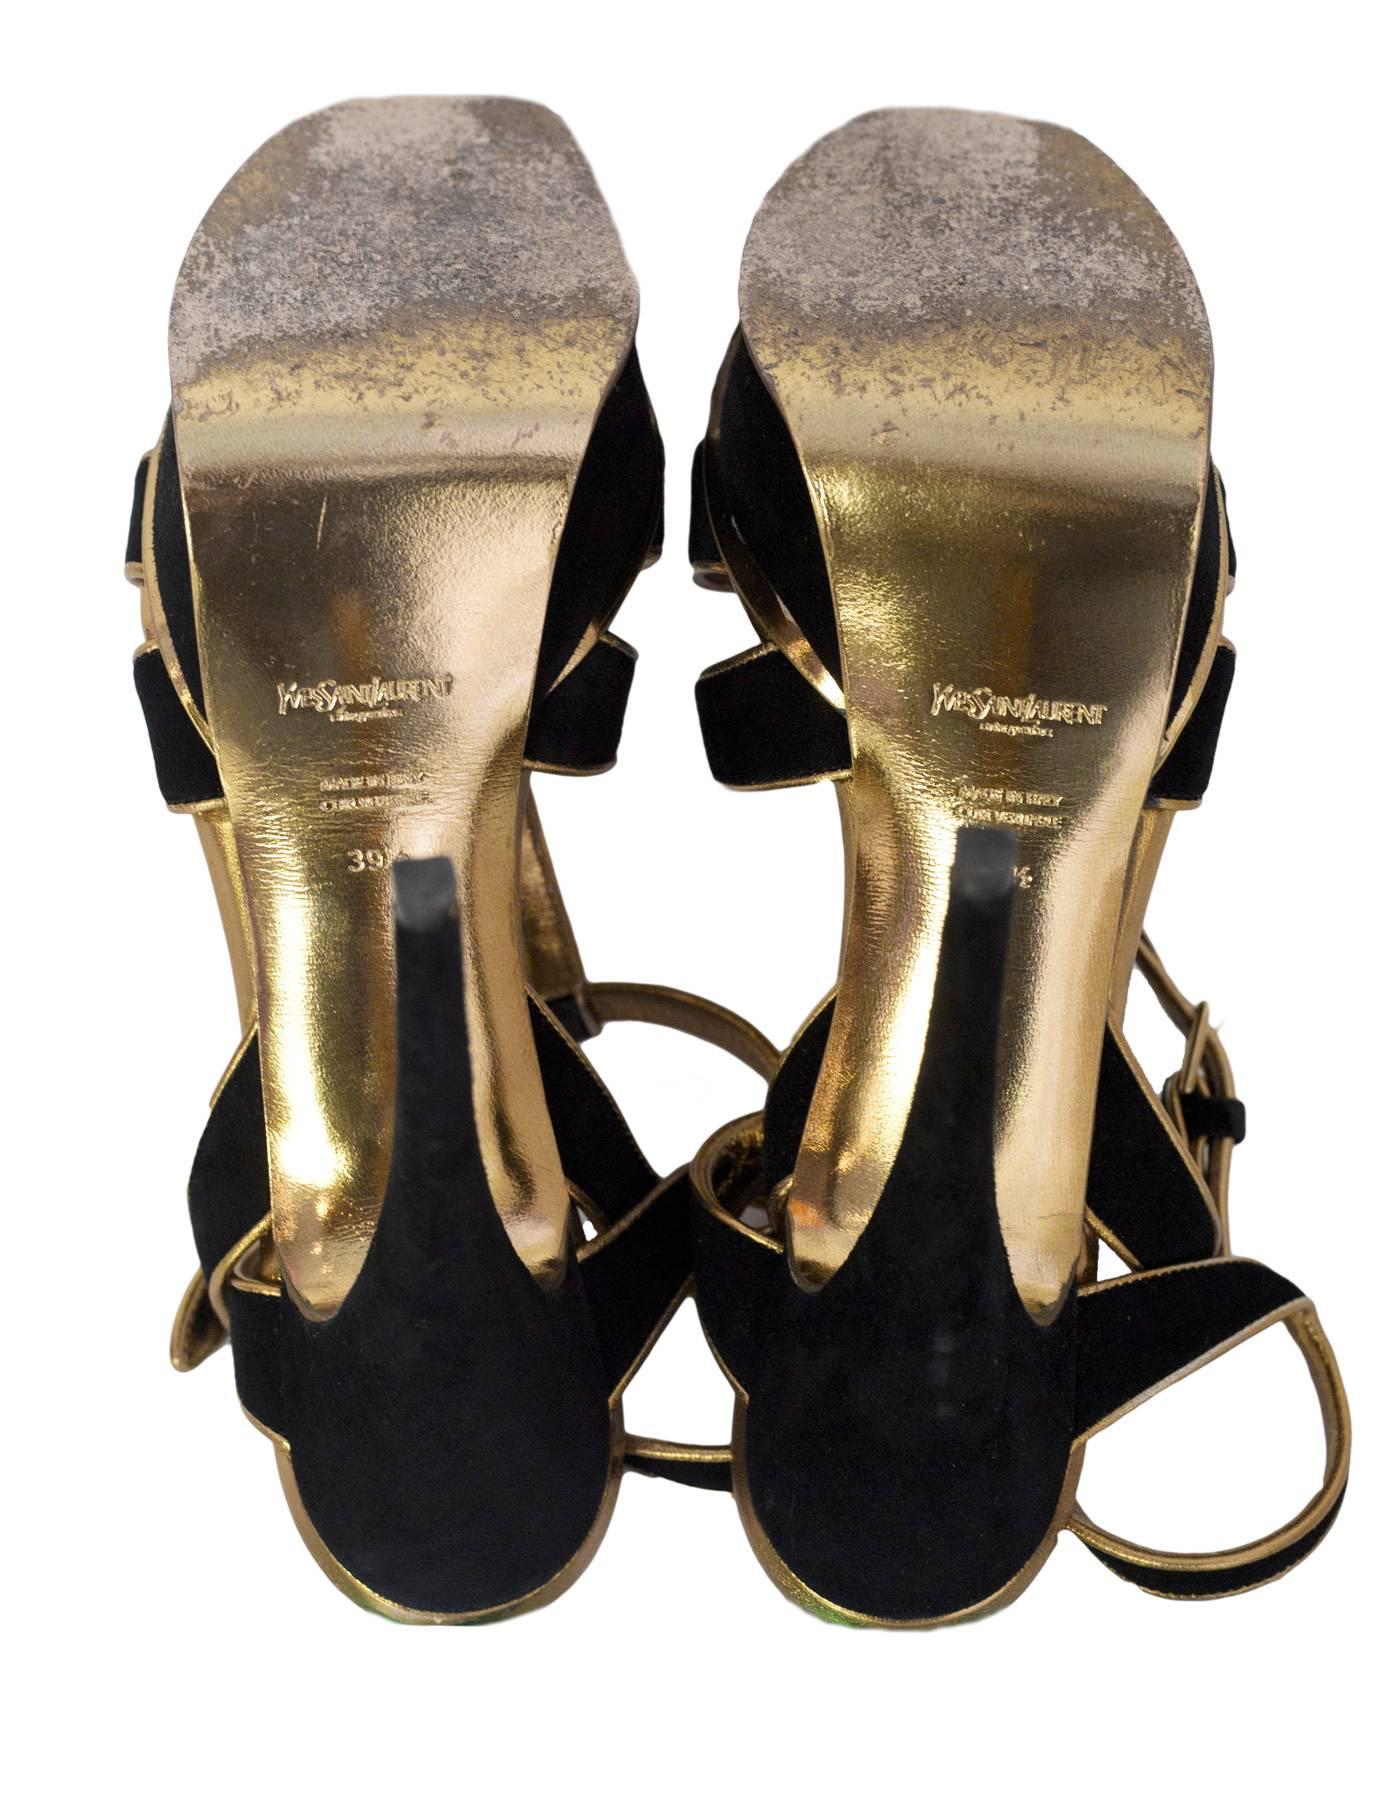 Yves Saint Laurent Black and Gold SuedeTribute 105 Sandals Sz 39.5 1